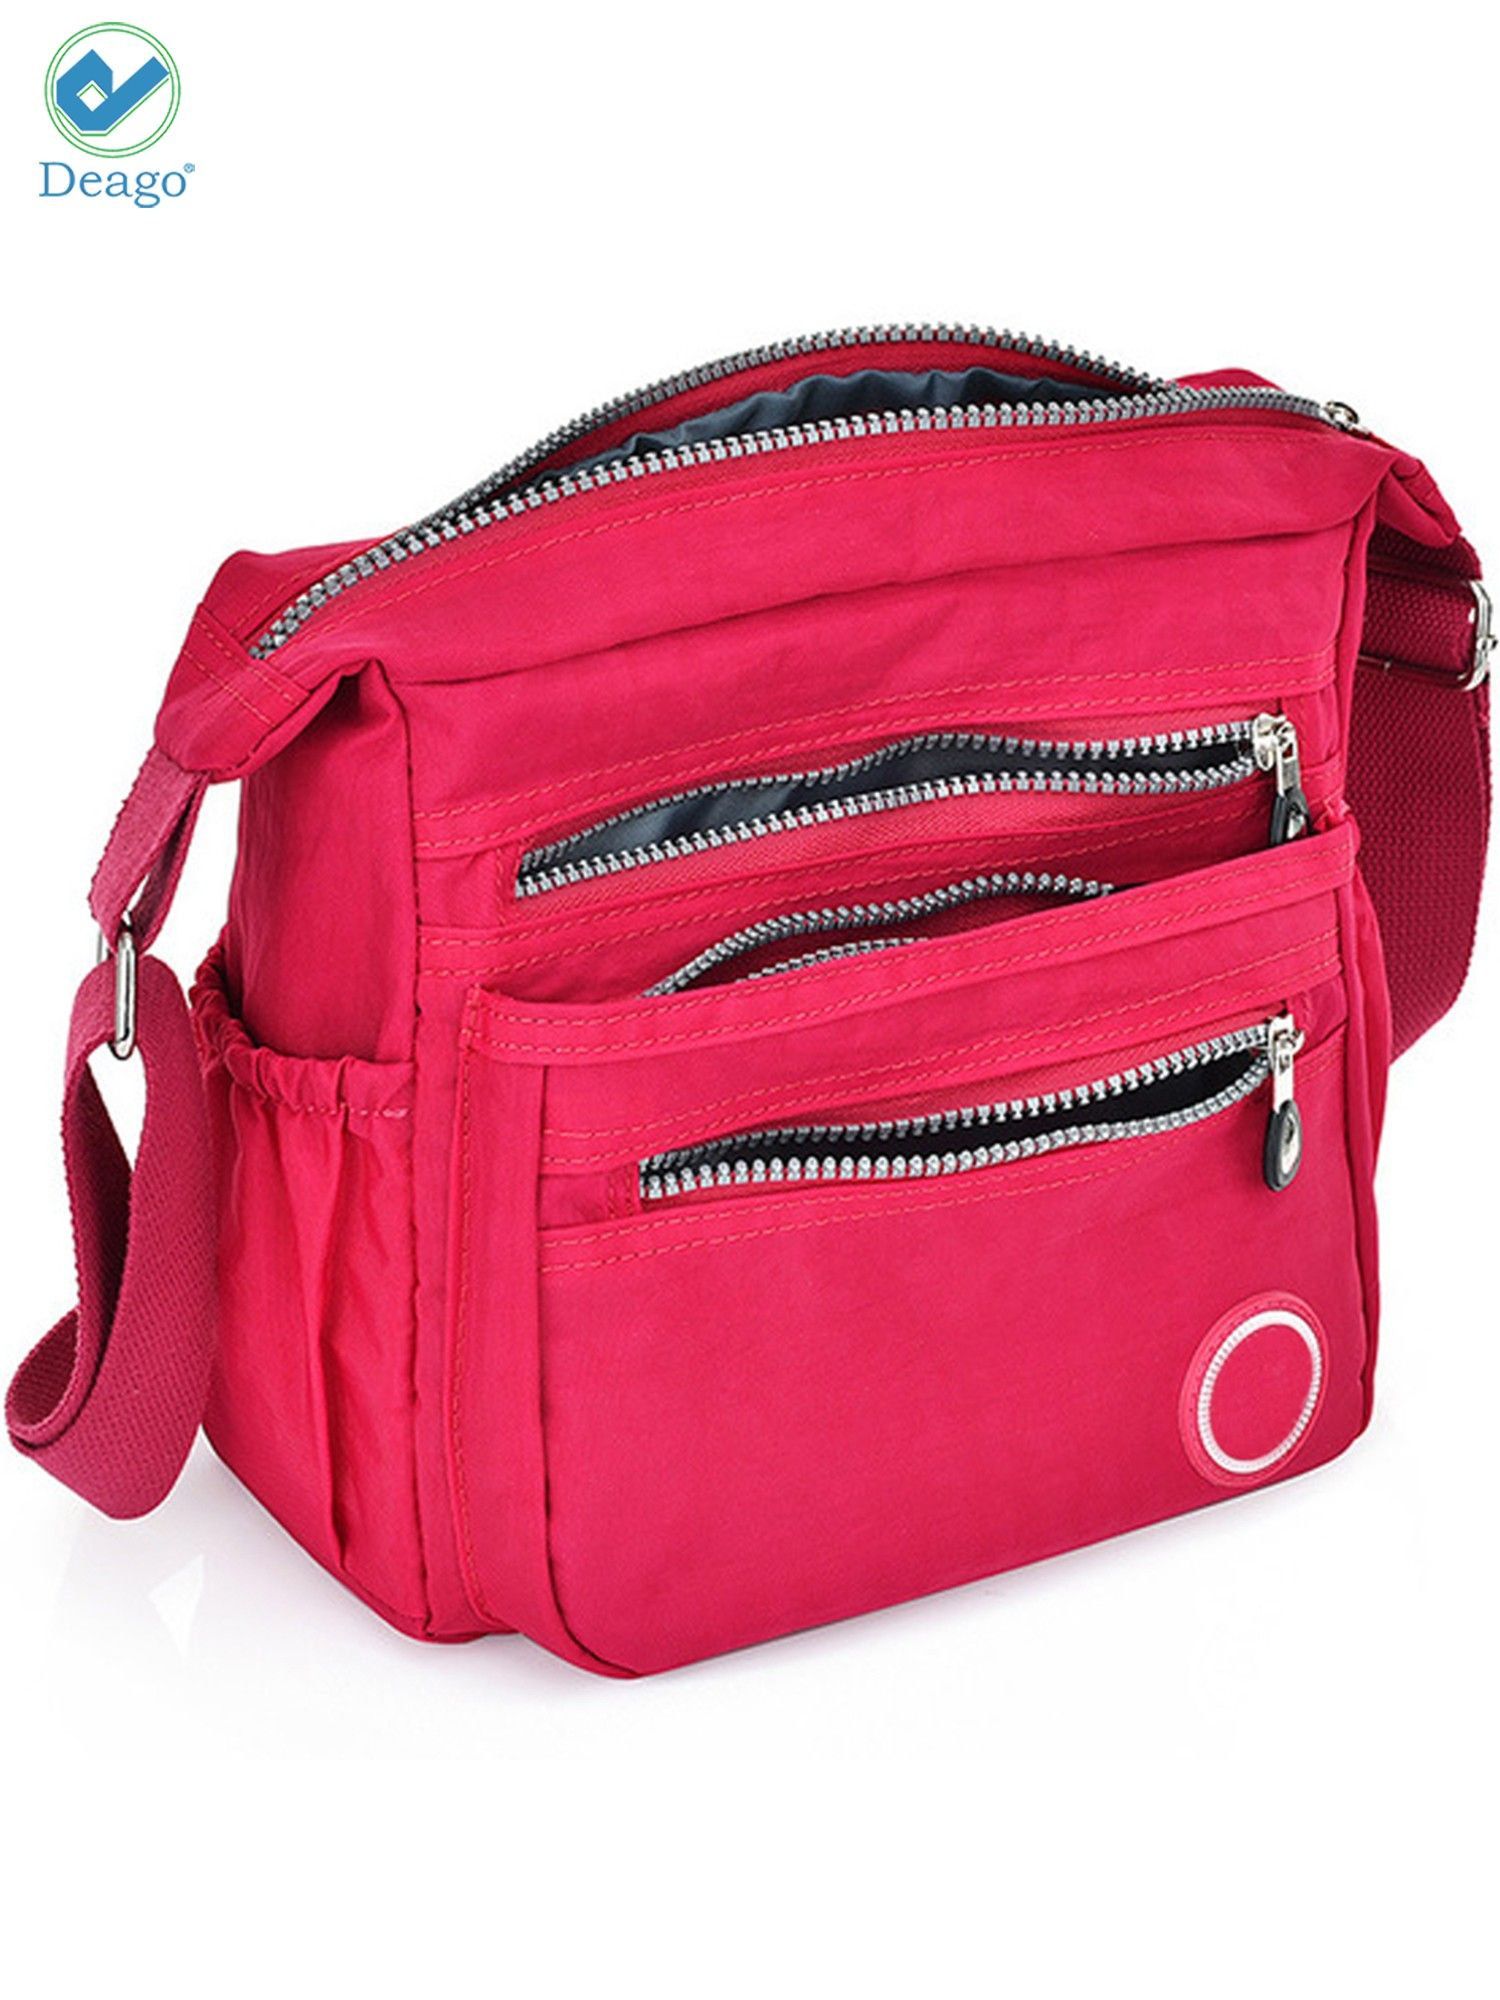 Deago Women's Waterproof Nylon Crossboby Shoulder Bag Casual Messenger Bag Handbag with Multi Pockets (Rose Red) - image 3 of 10